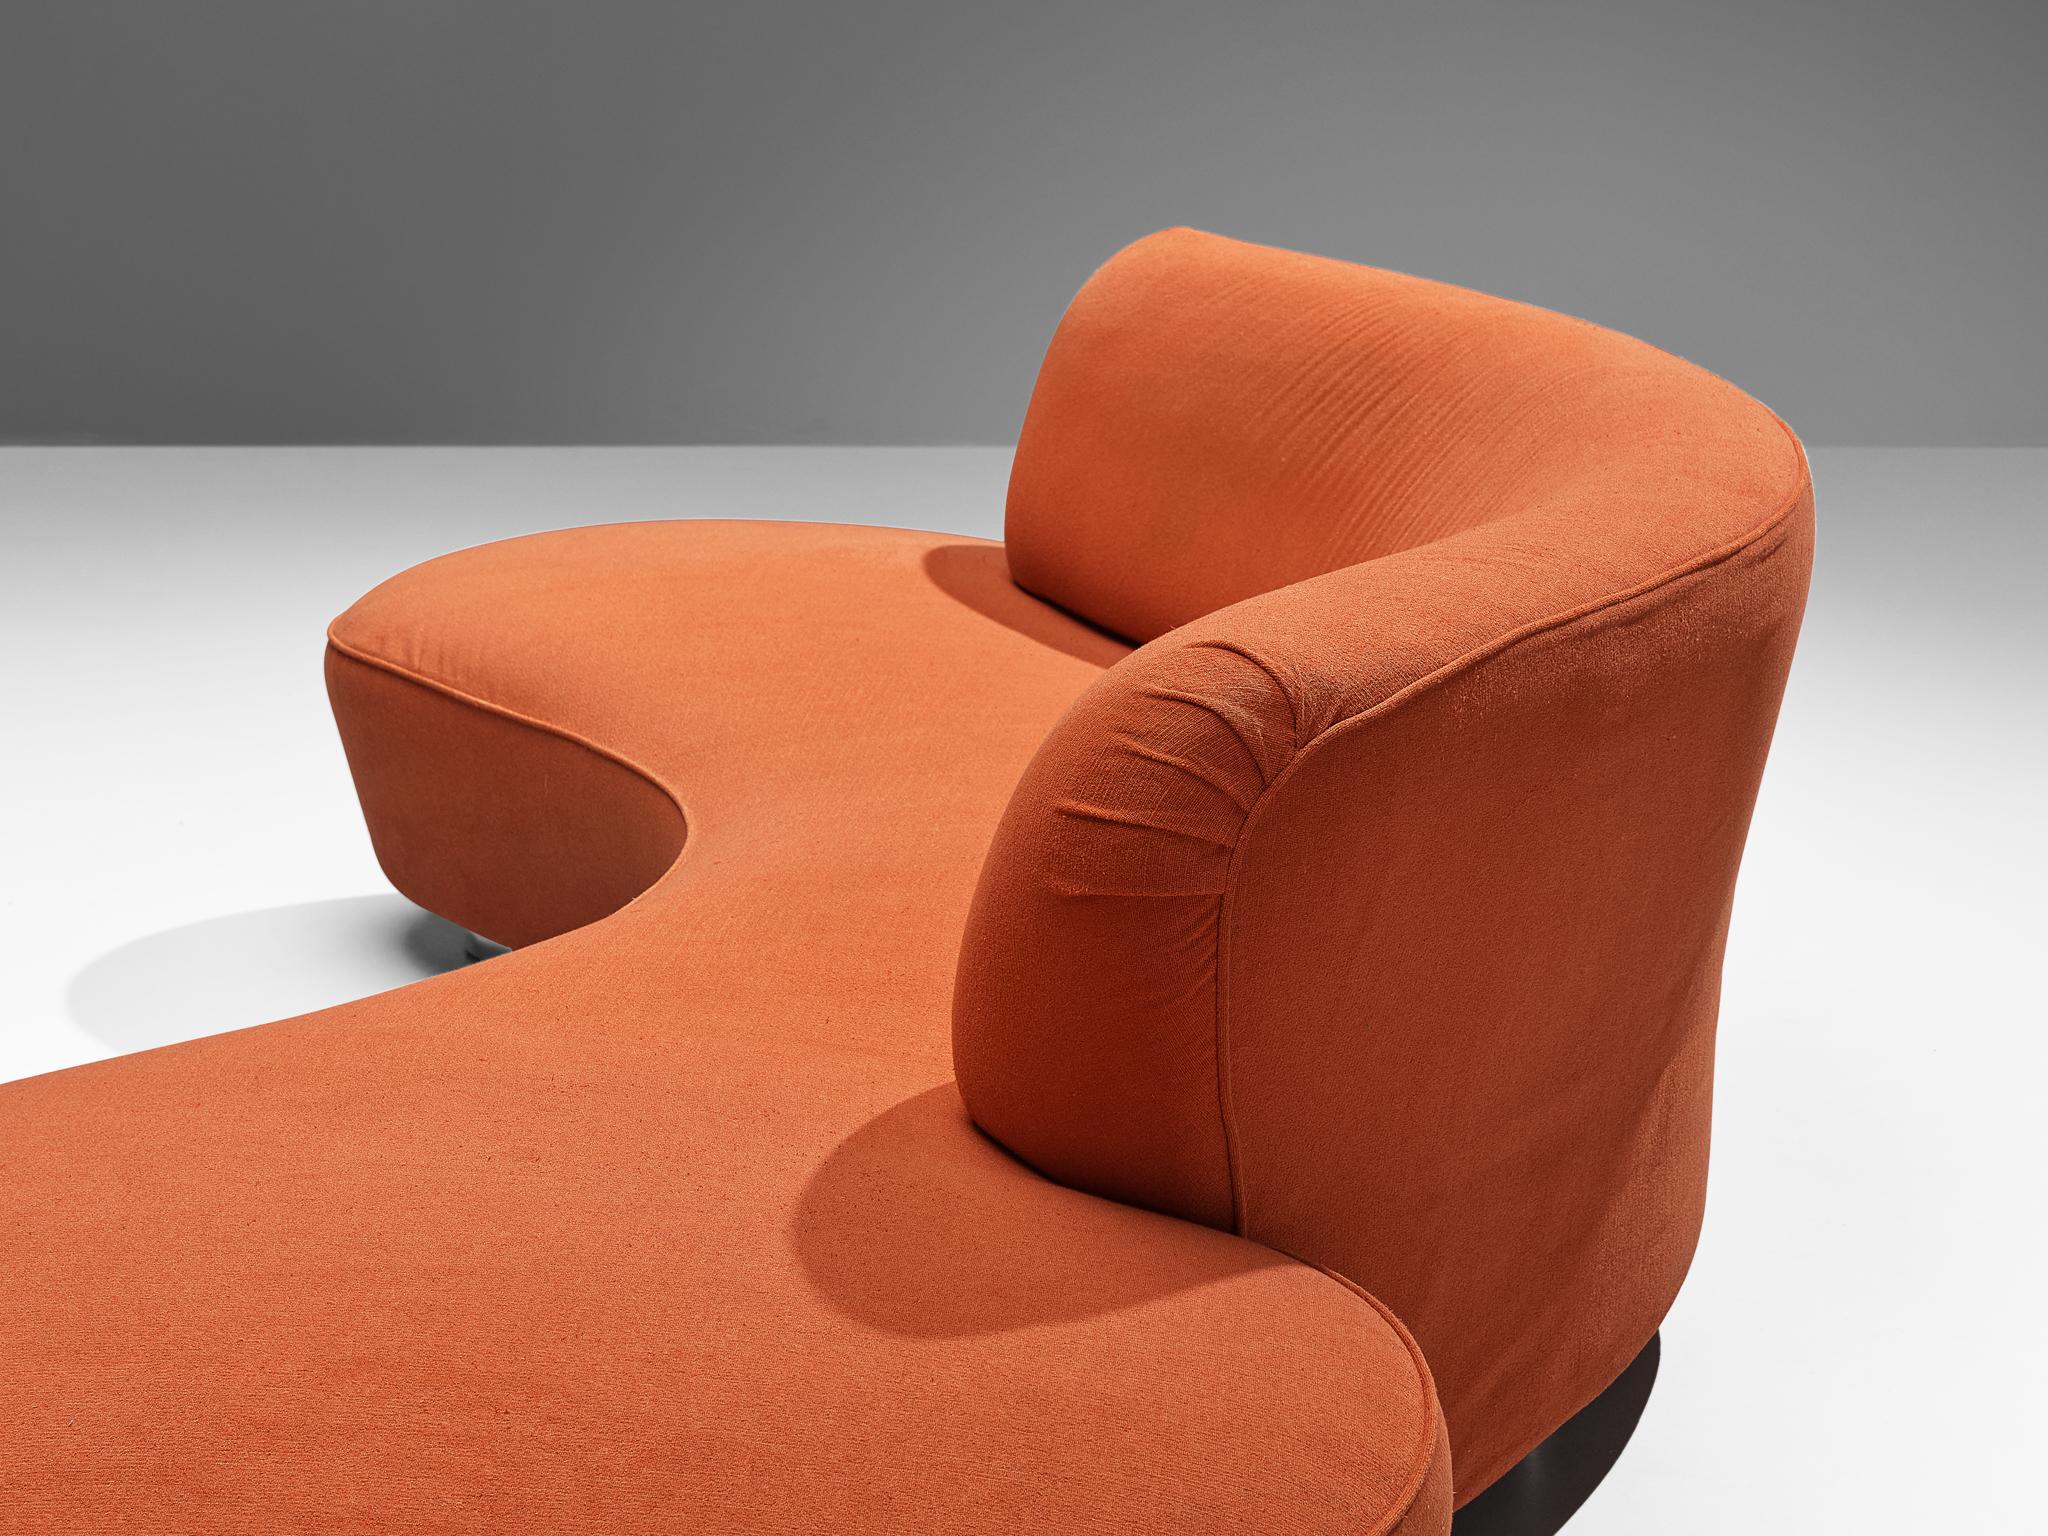 American Iconic Vladimir Kagan ‘Serpentine’ Sofa with Ottoman in Red Orange Fabric